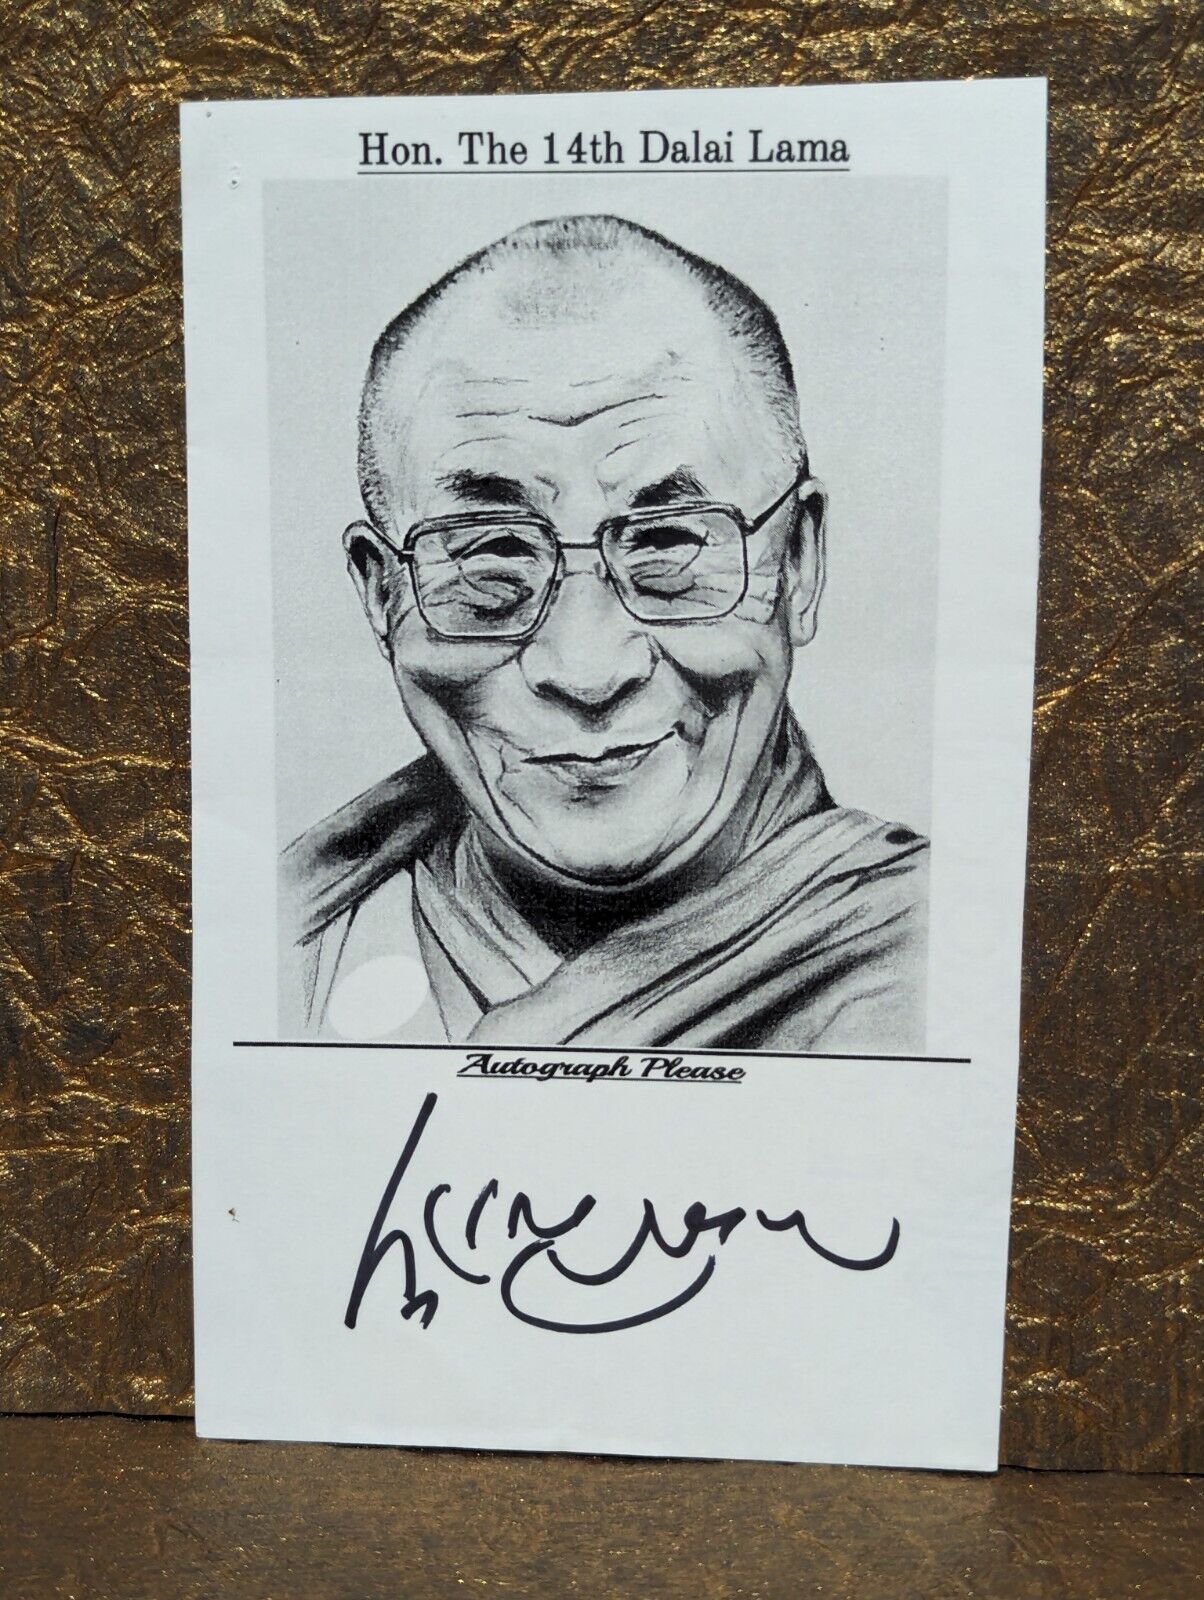 Dalai Lama Autograph Signed Photo PSA DNA Full Letter of Authenticity